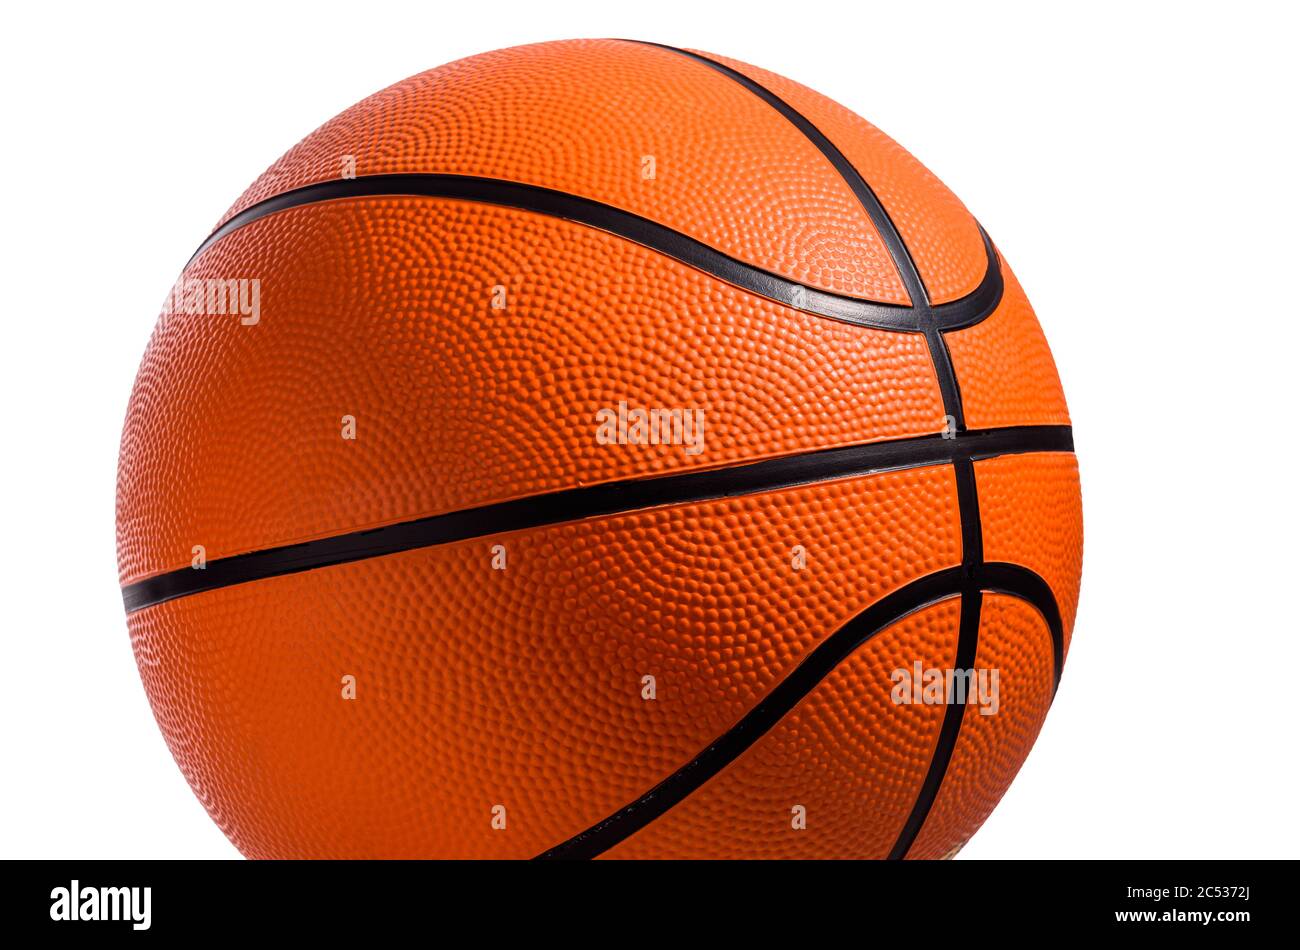 Baloncesto aislado sobre fondo blanco. Bola naranja. Concepto deportivo. Foto de stock